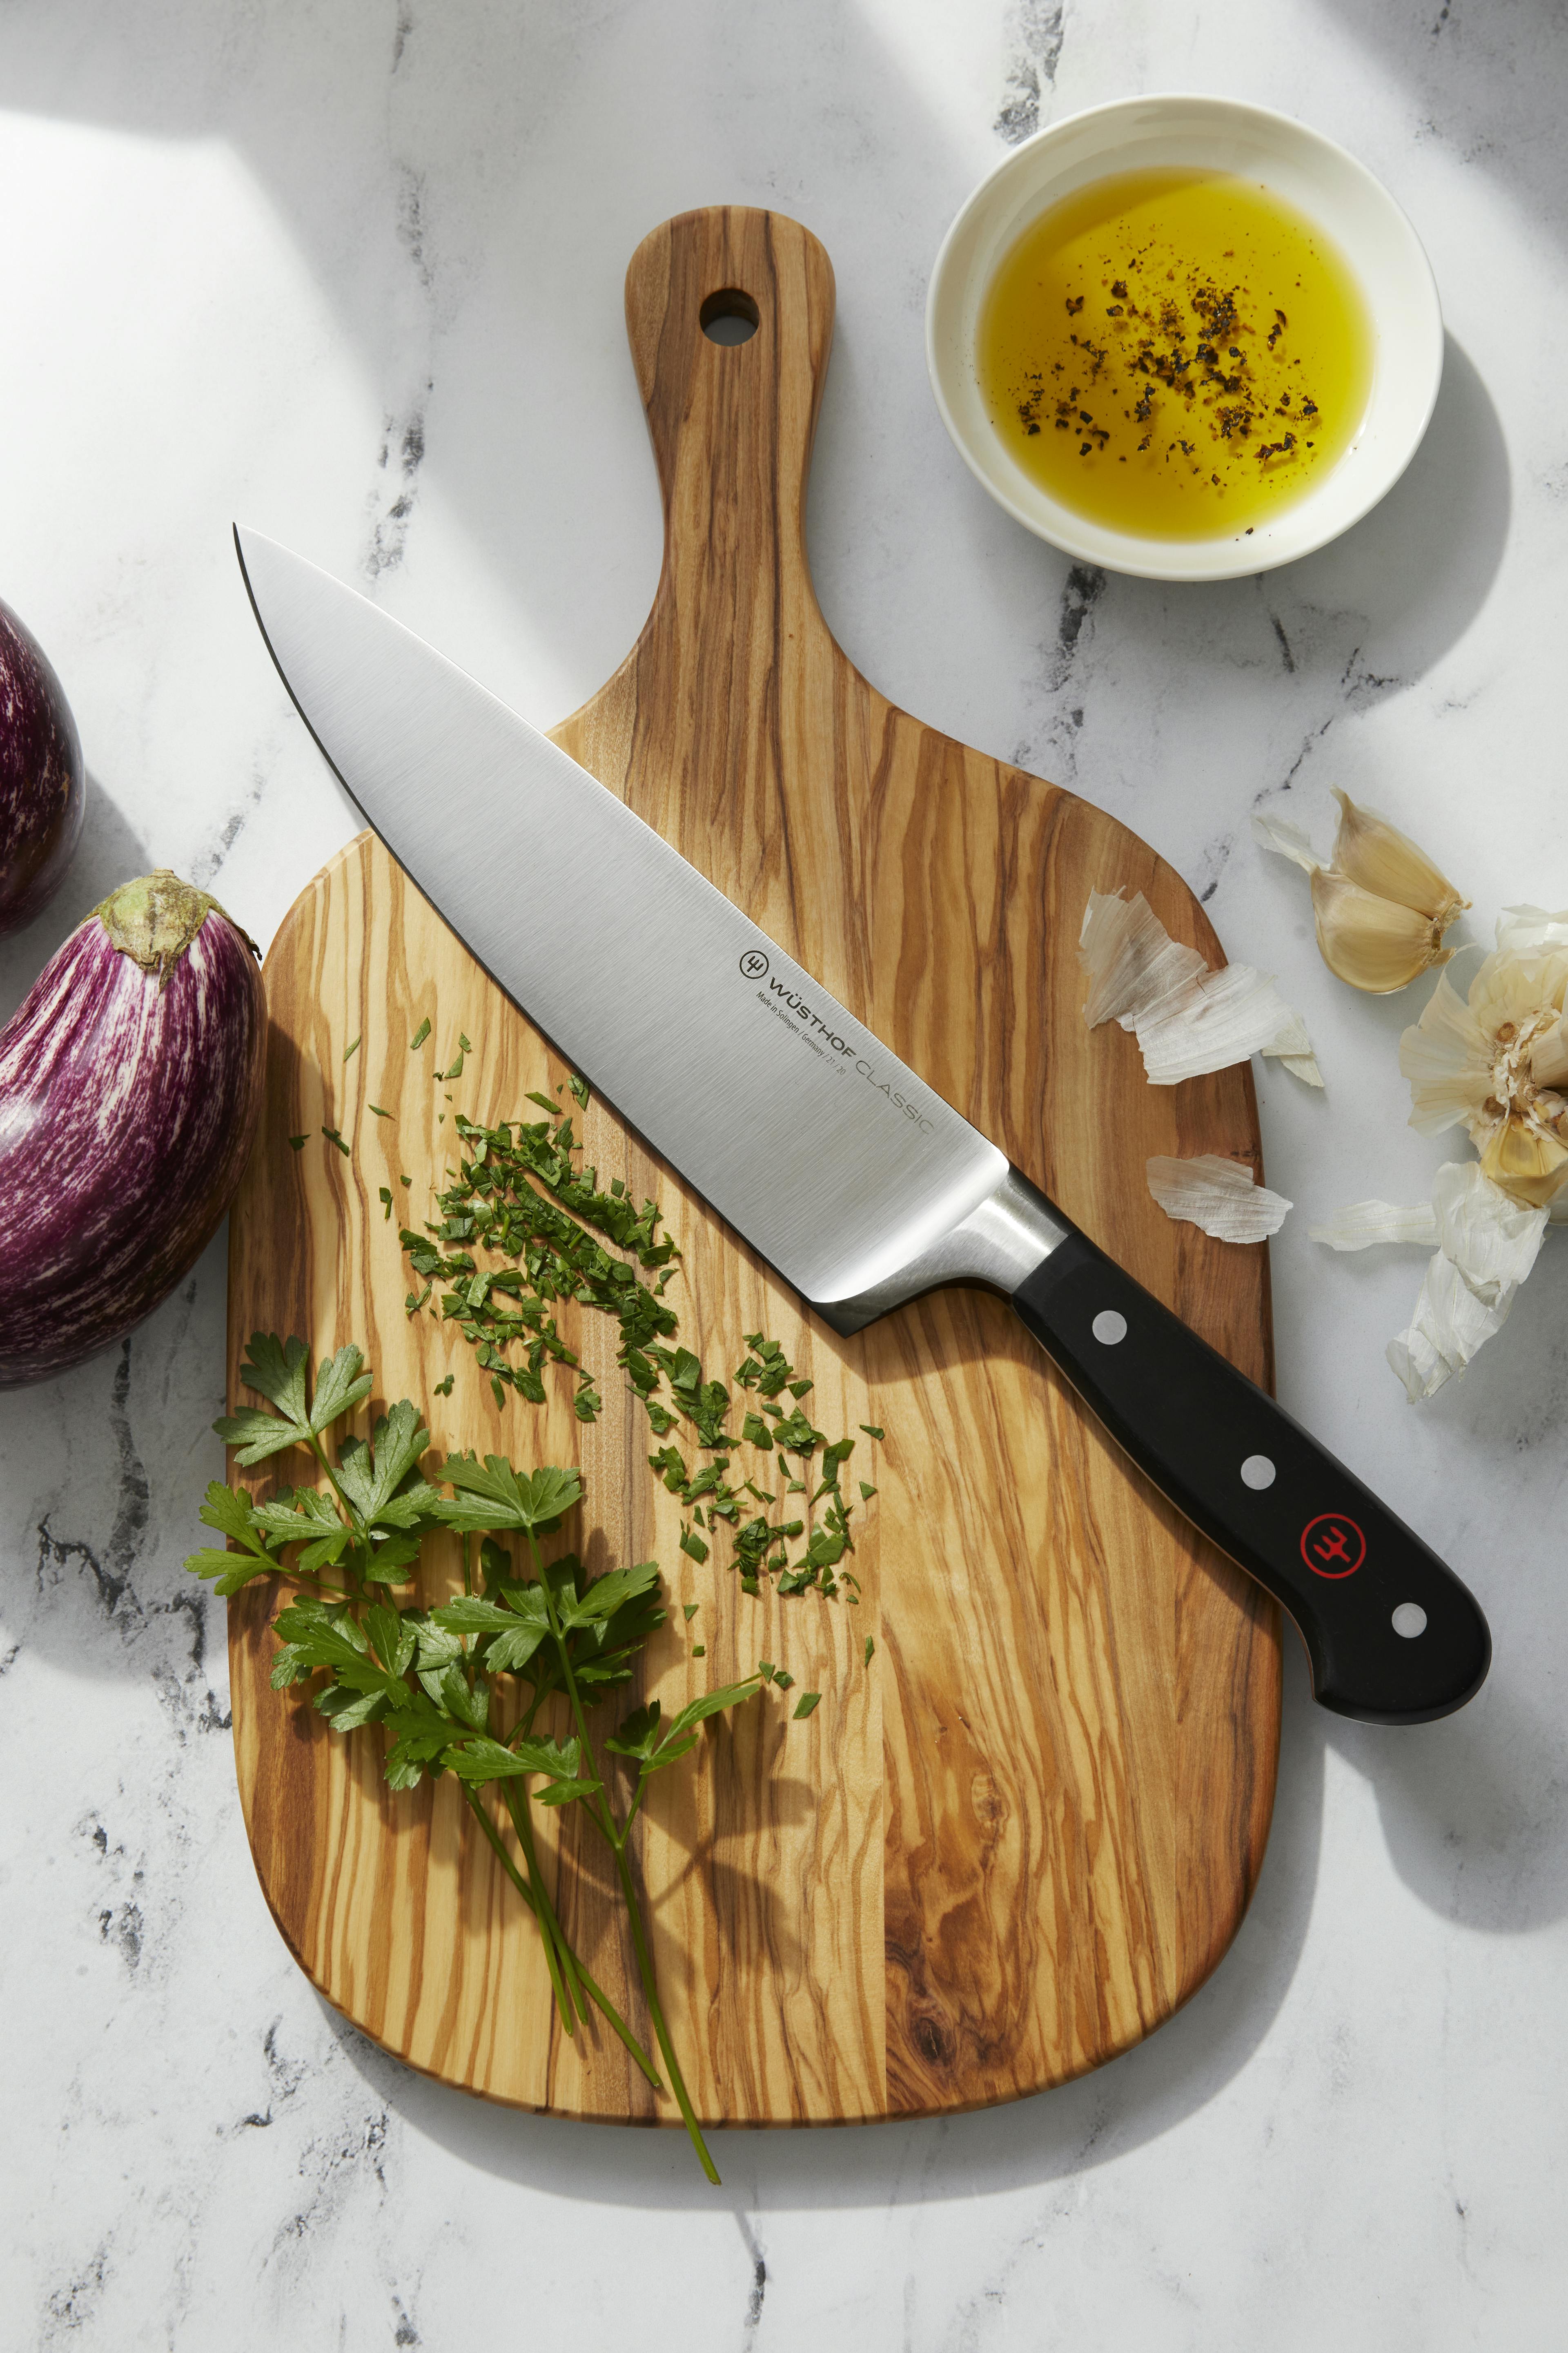 WÜSTHOF Classic chef's knife on cutting board